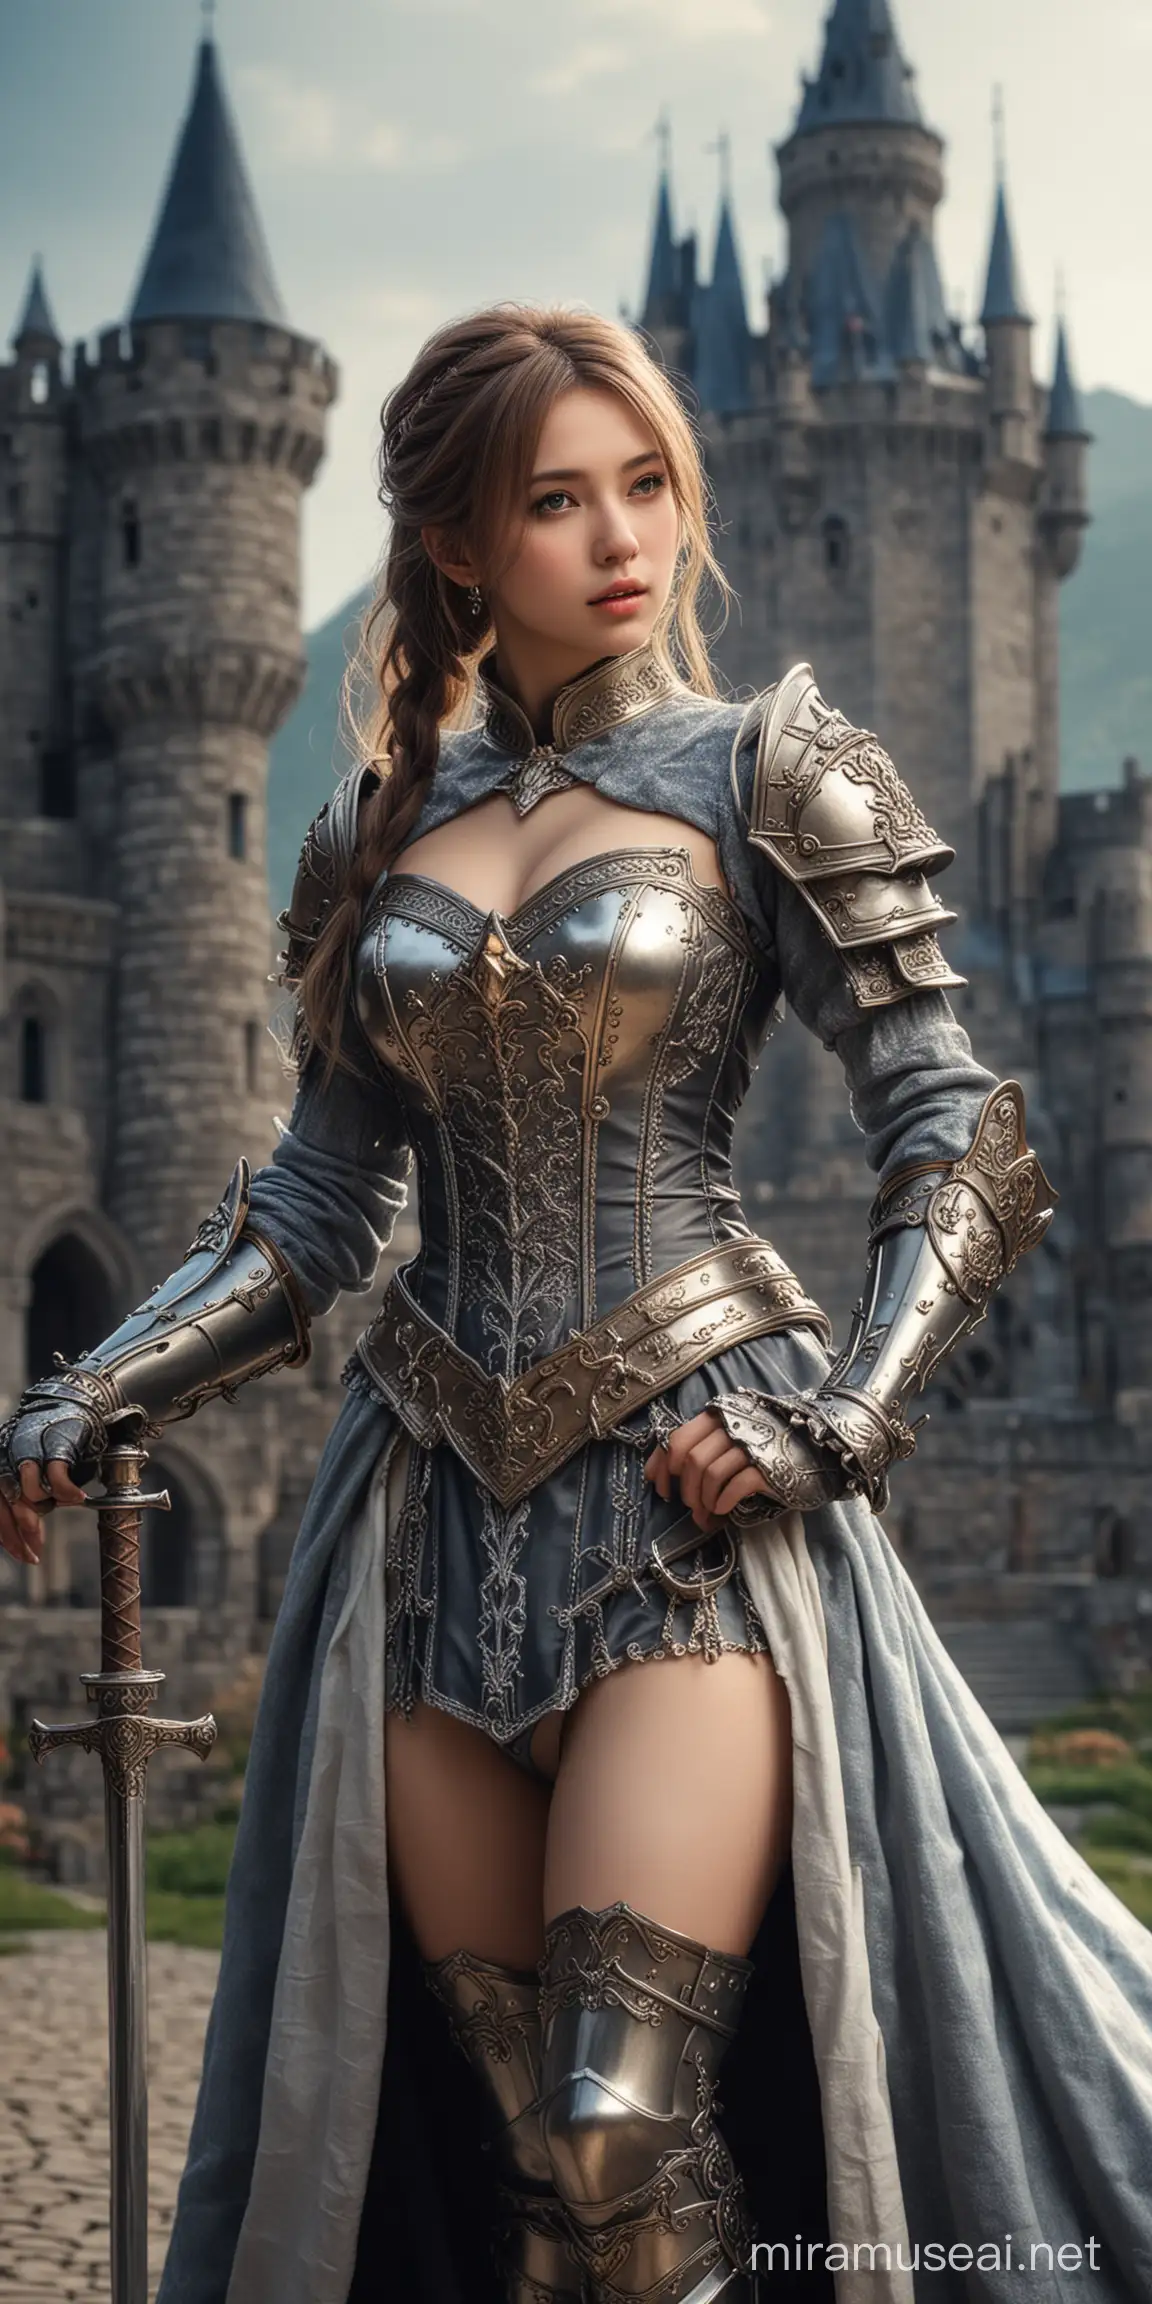 Elegant Knightess Idol in a Castle Full Body Detail with Studio Lighting